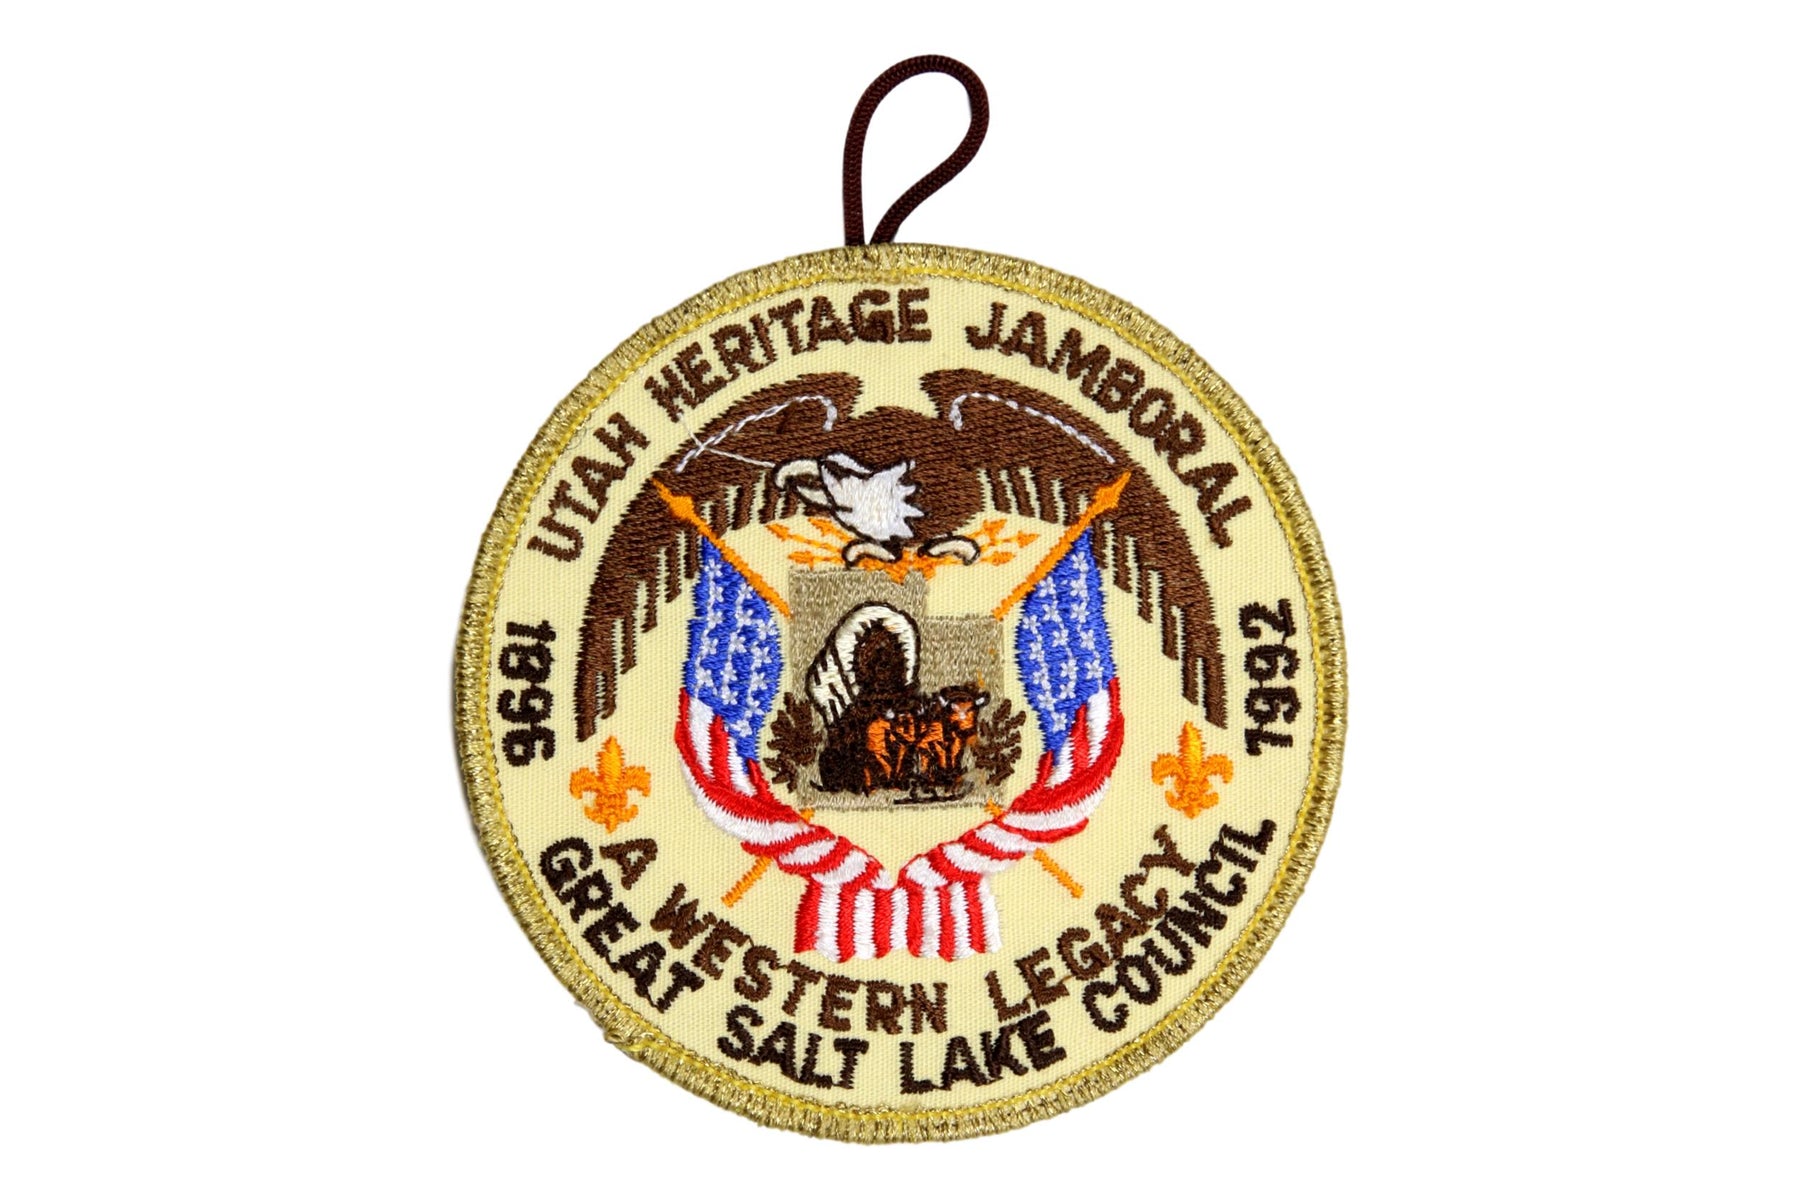 1992 Great Salt Lake Utah Heritage Jamboral Patch Gold Mylar Border